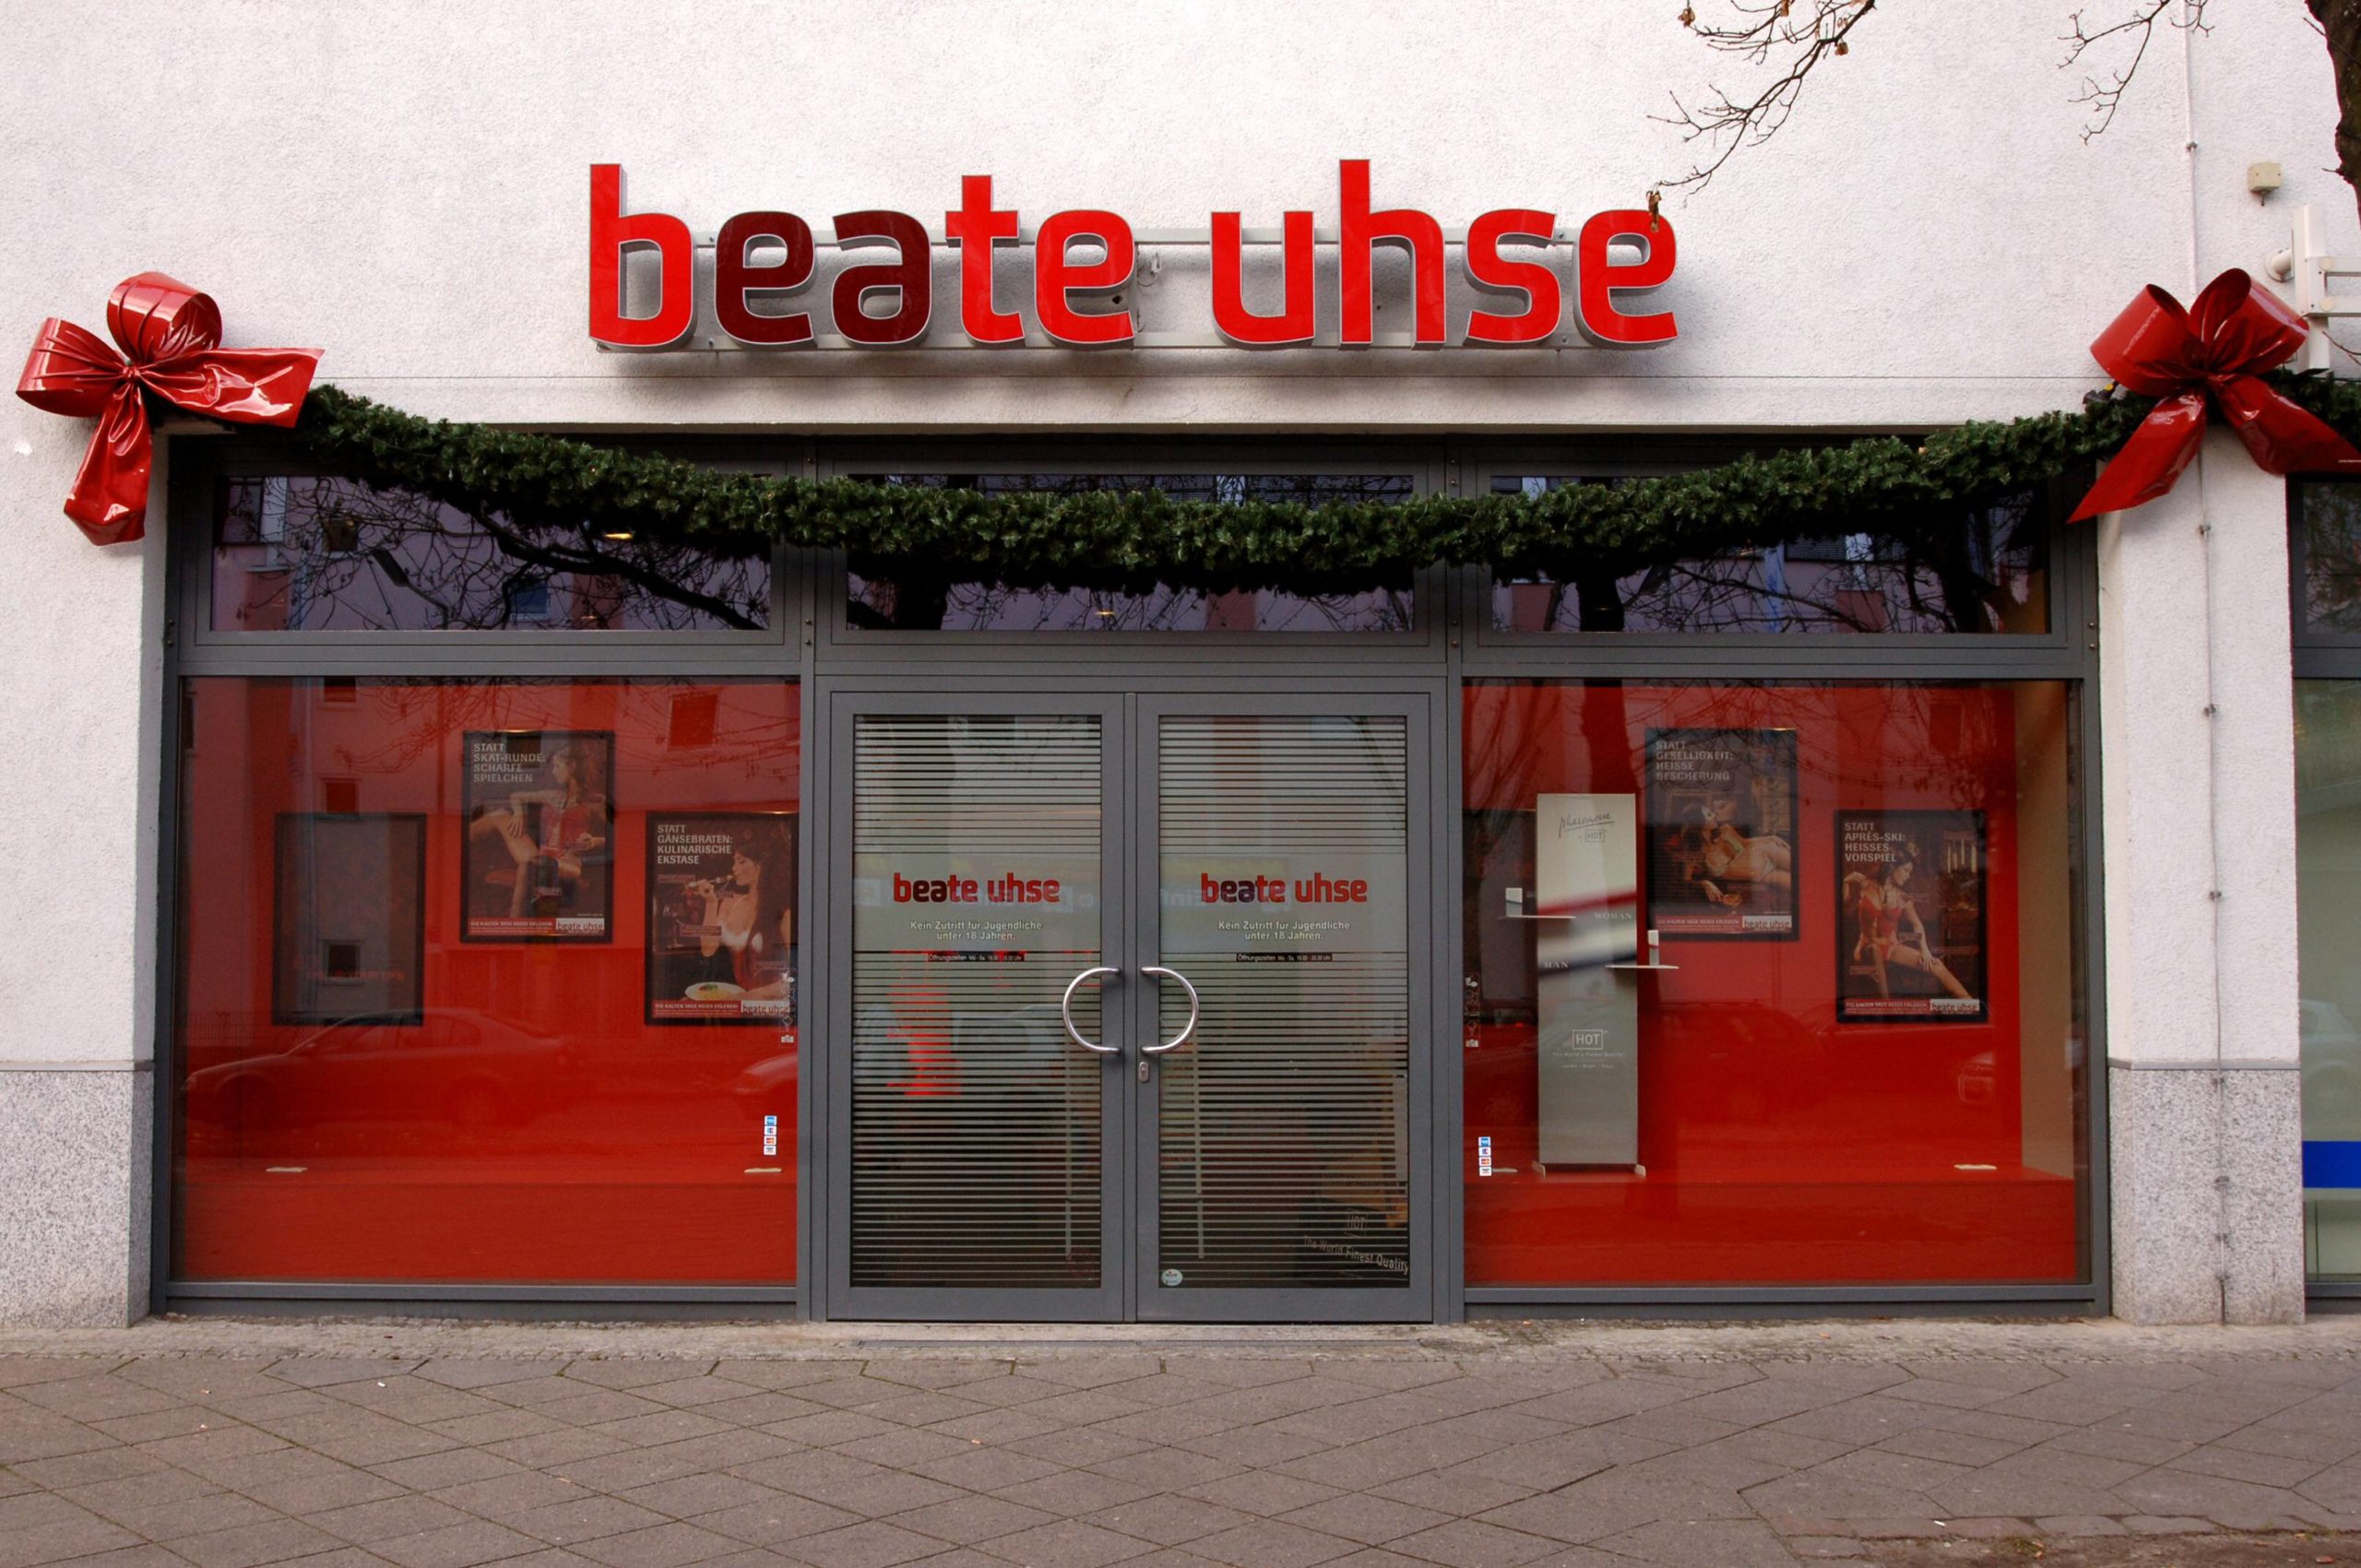 Beate Uhse Erotikshop in Berlin, 2005. Foto: Imago/Petra Schneider